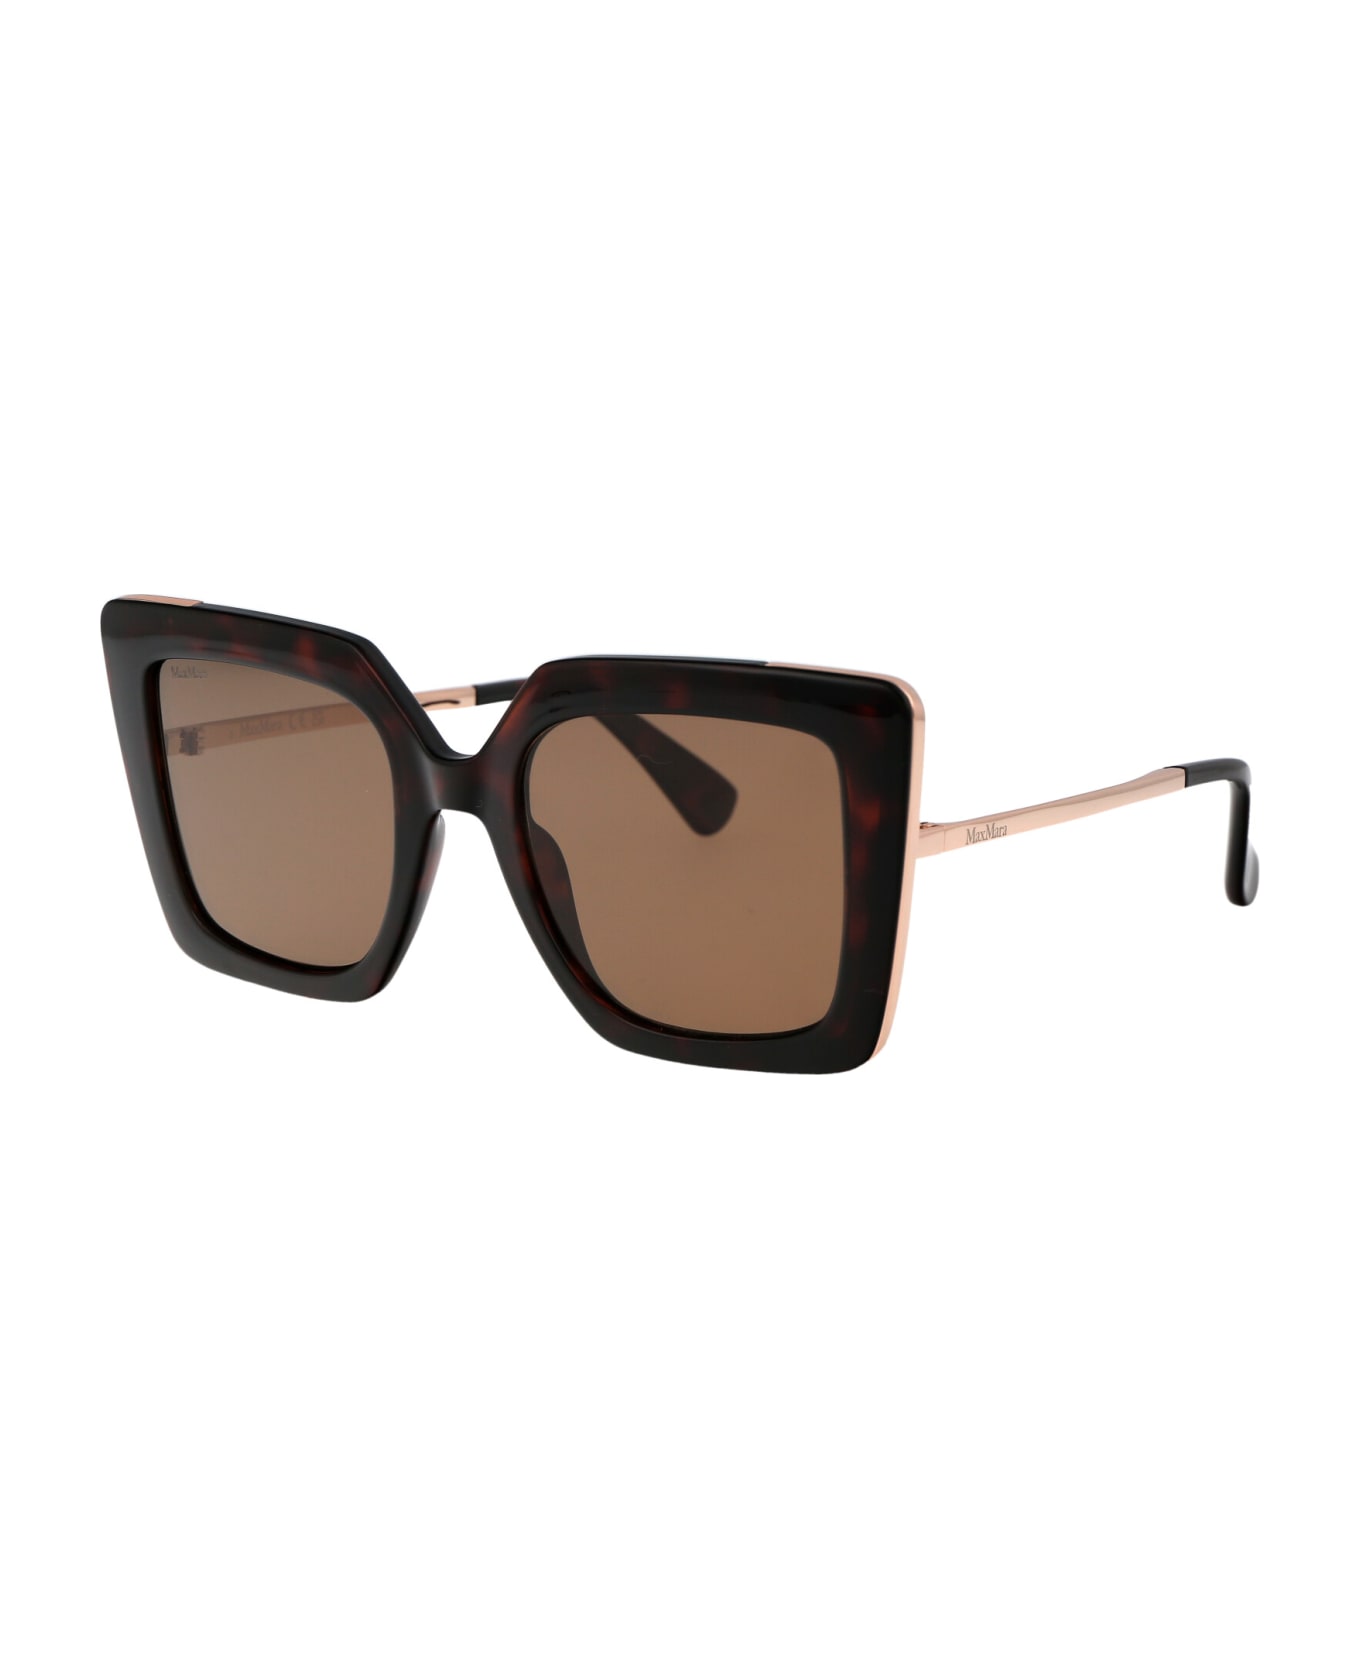 Max Mara Design4 Sunglasses - 54S Avana Rossa/Bordeaux サングラス